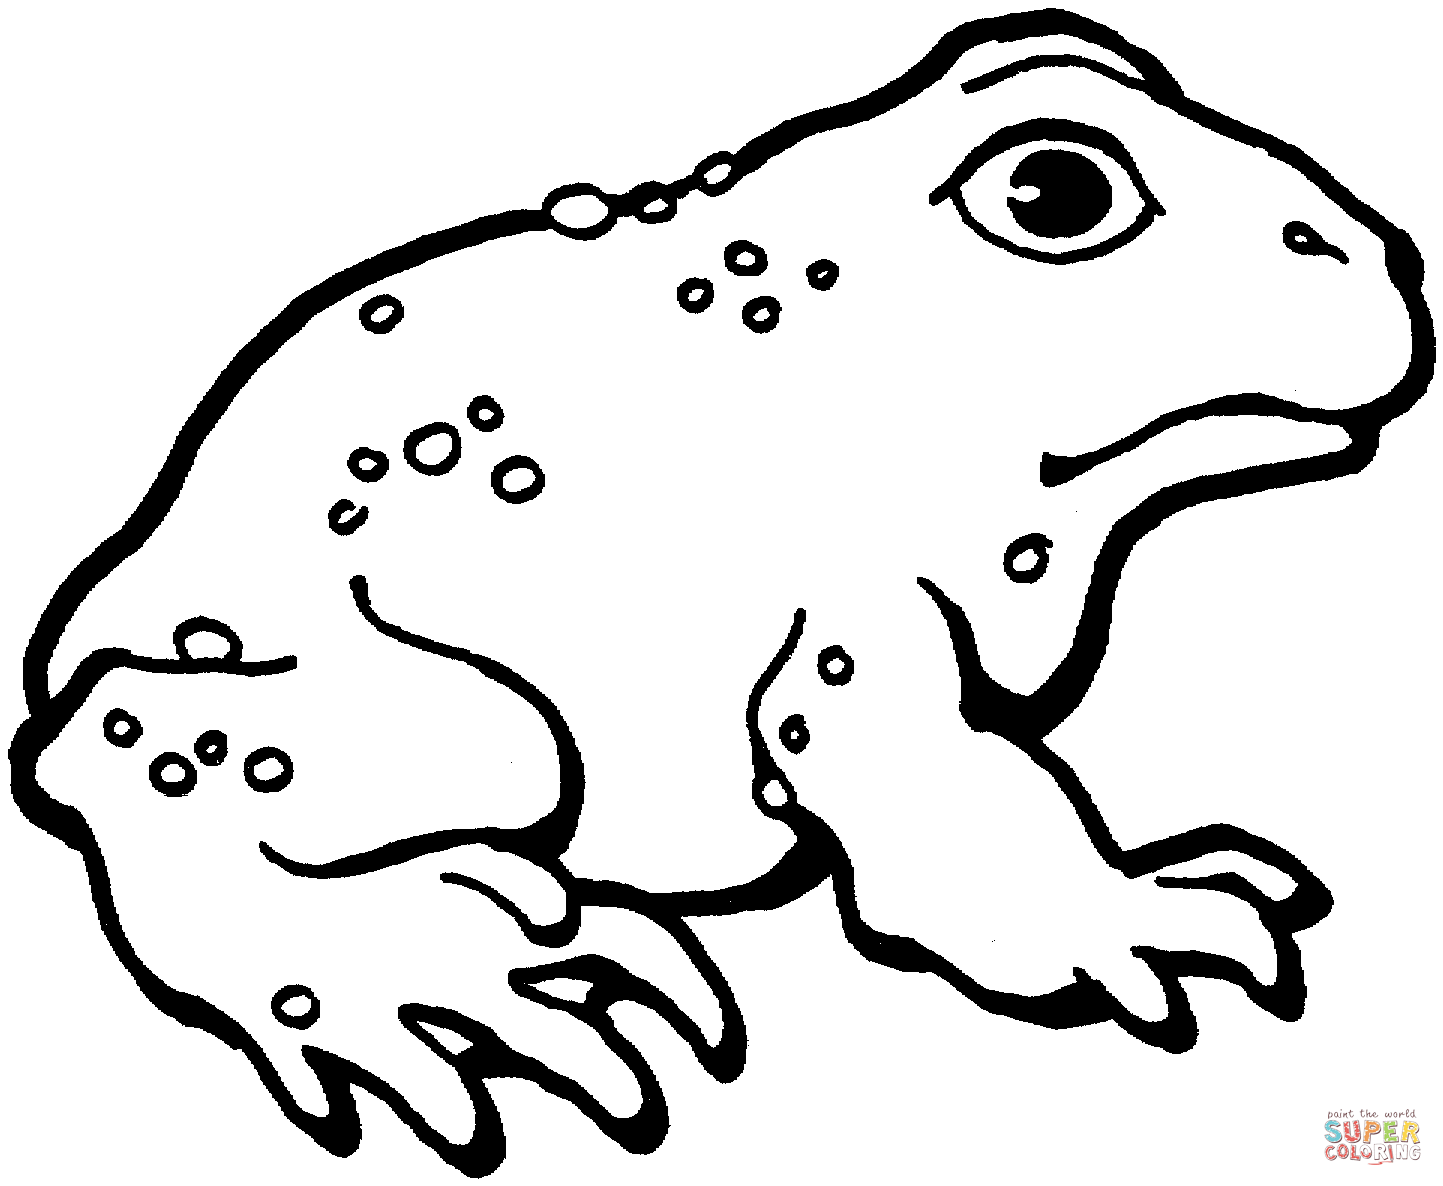 American Toad coloring #9, Download drawings